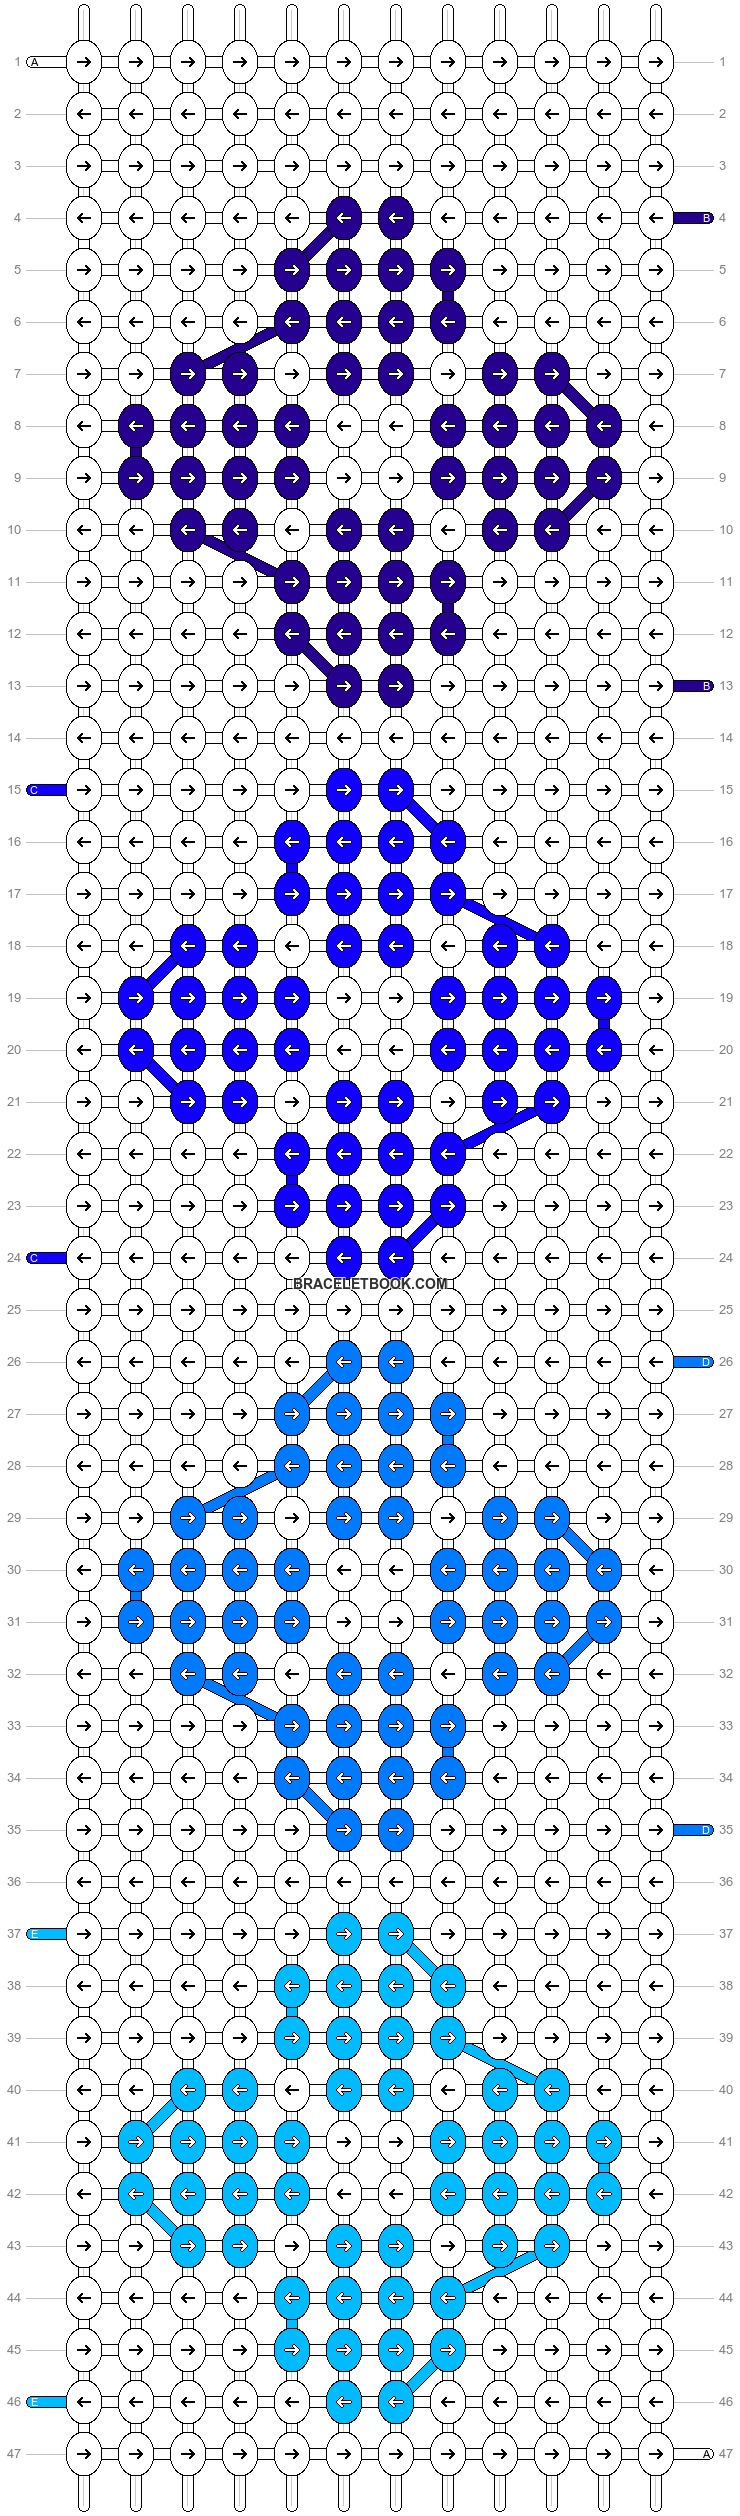 Alpha pattern #53632 pattern